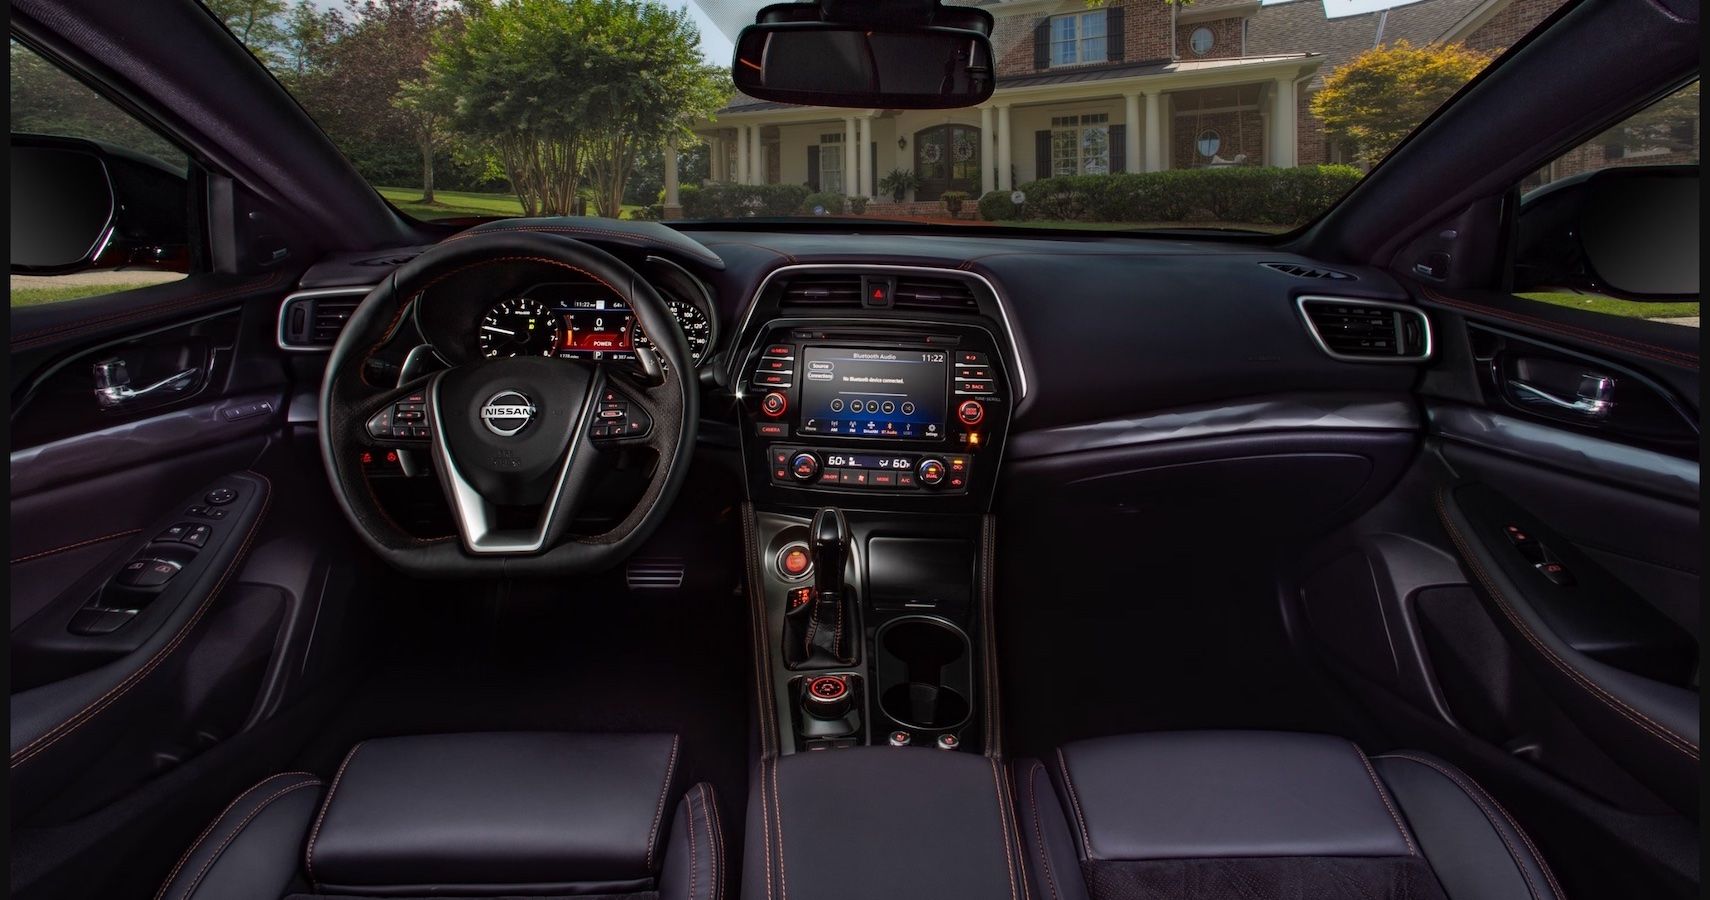 A peek inside the 2023 Nissan Maxima's interior.